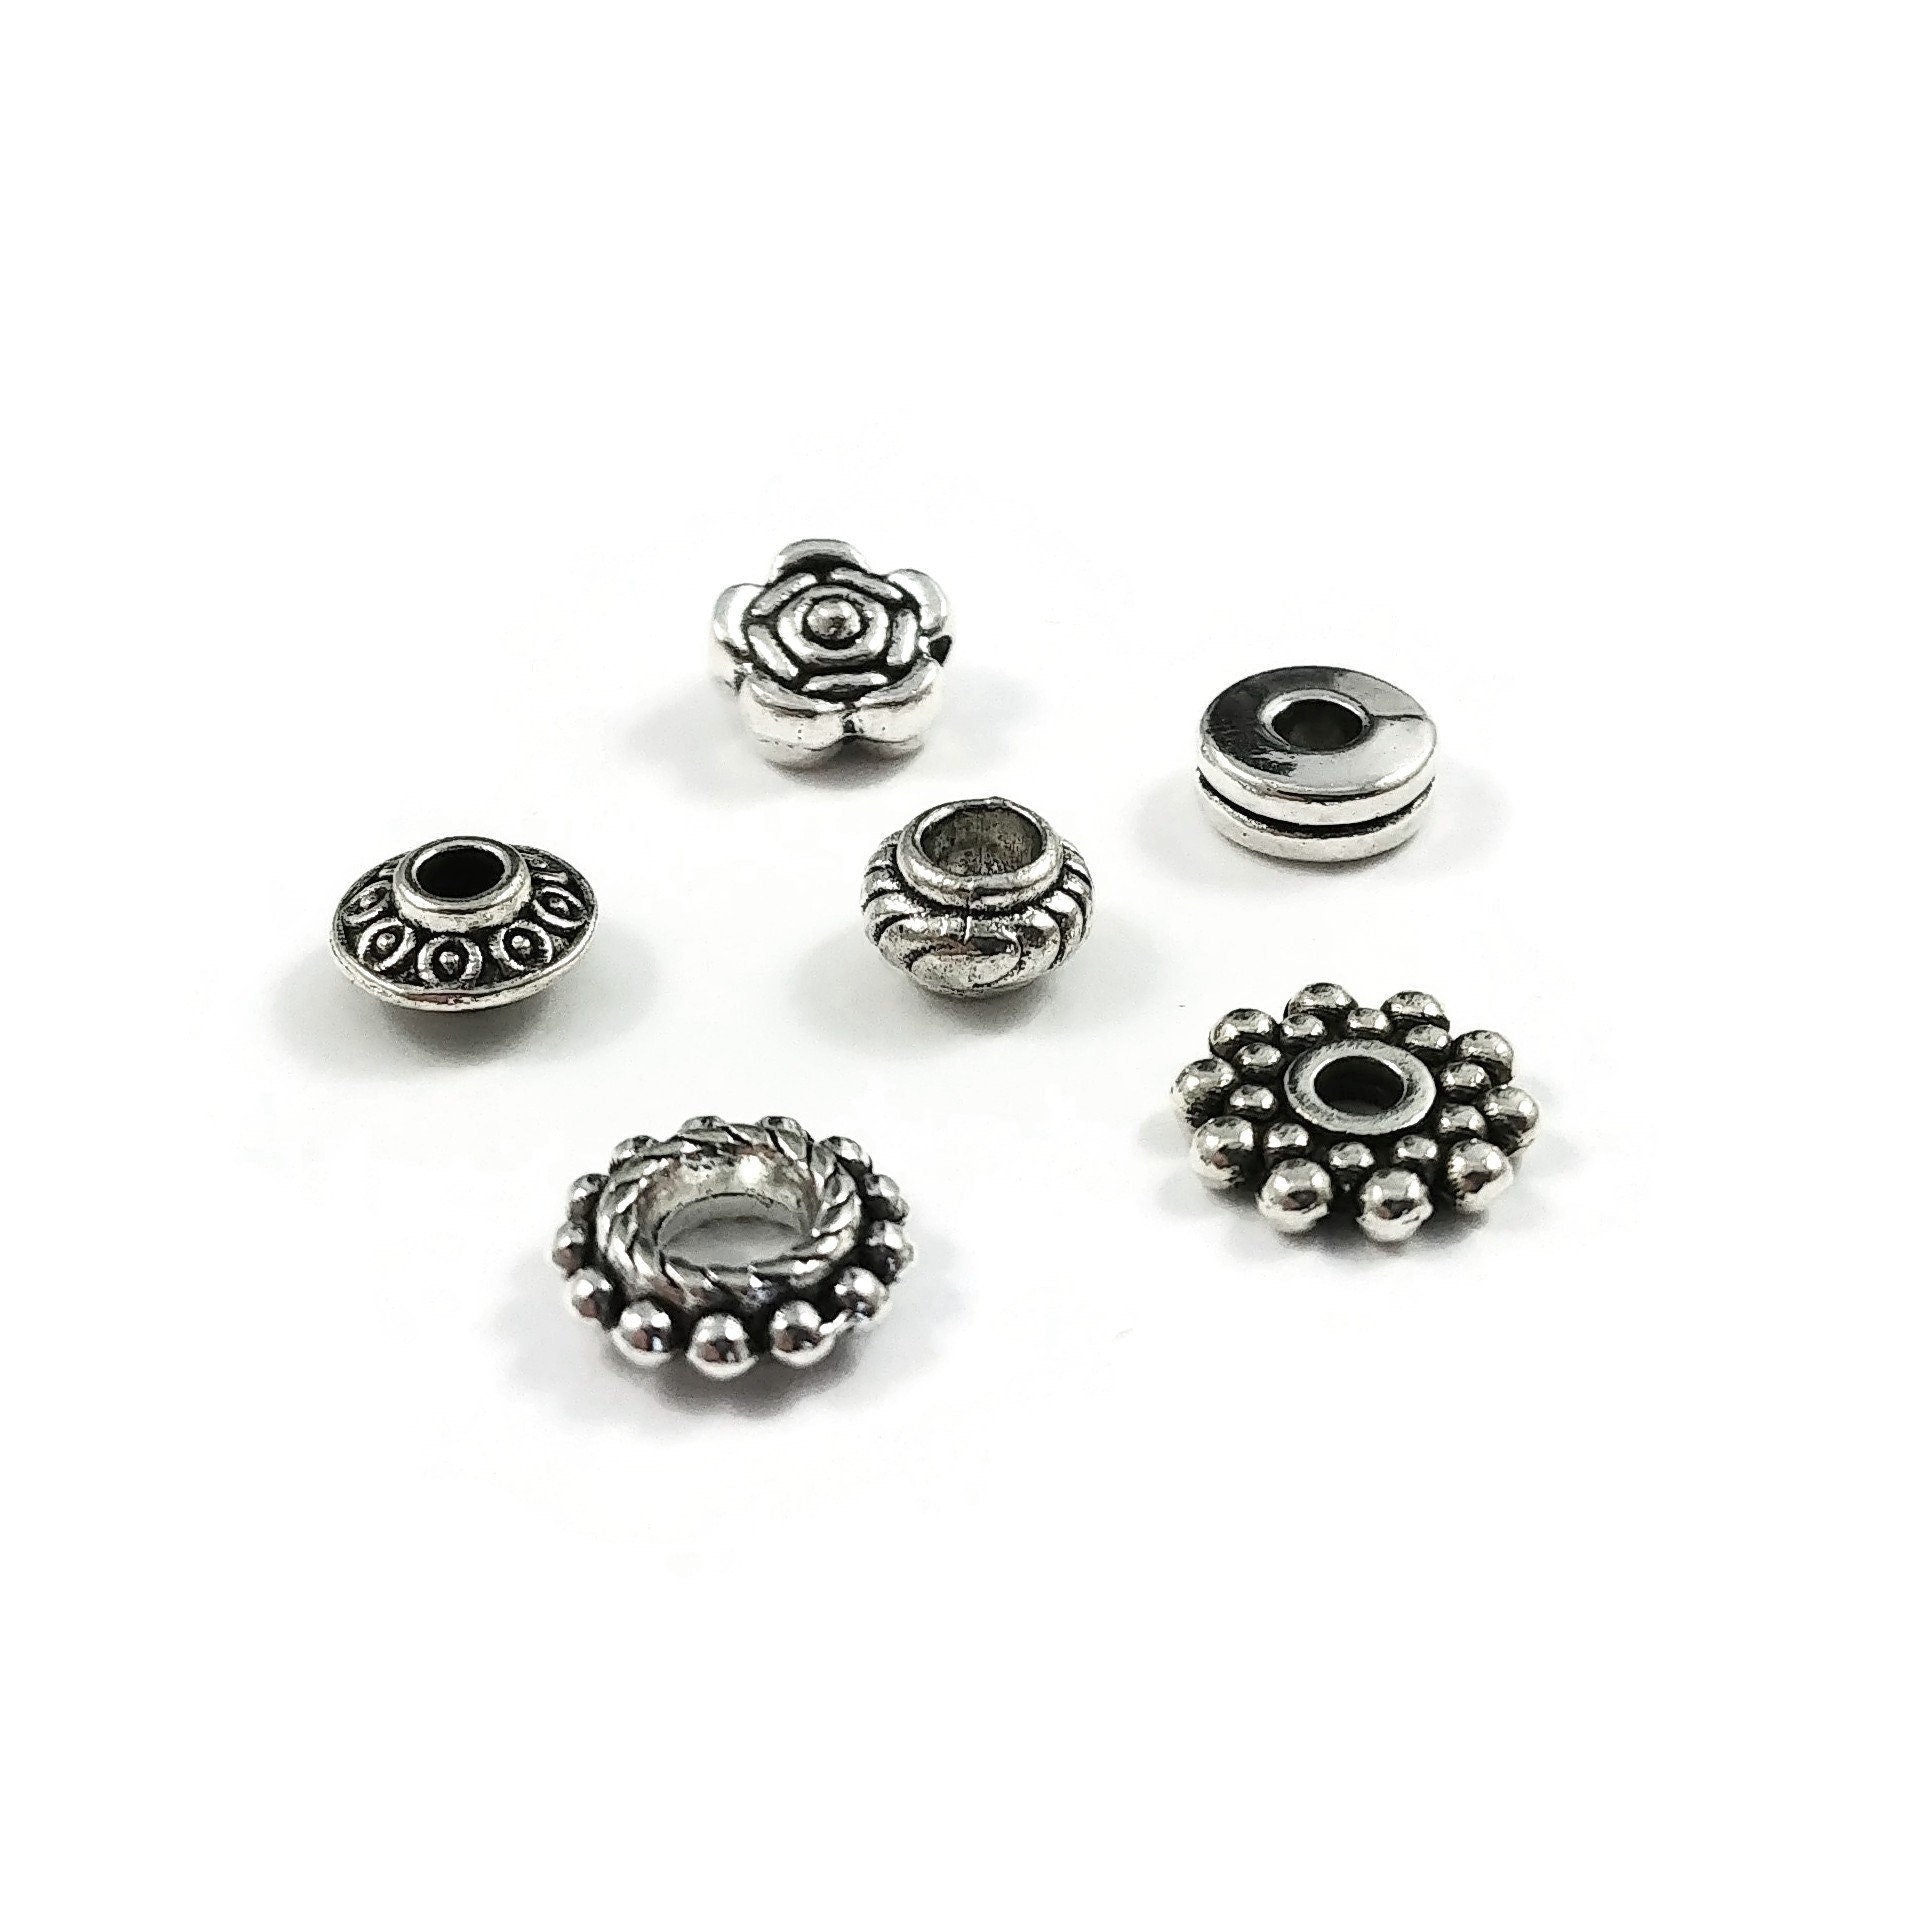 Silver metal spacer beads kit, 300pcs assorted tibetan styles, Hypoallergenic nickel free findings jewelry making